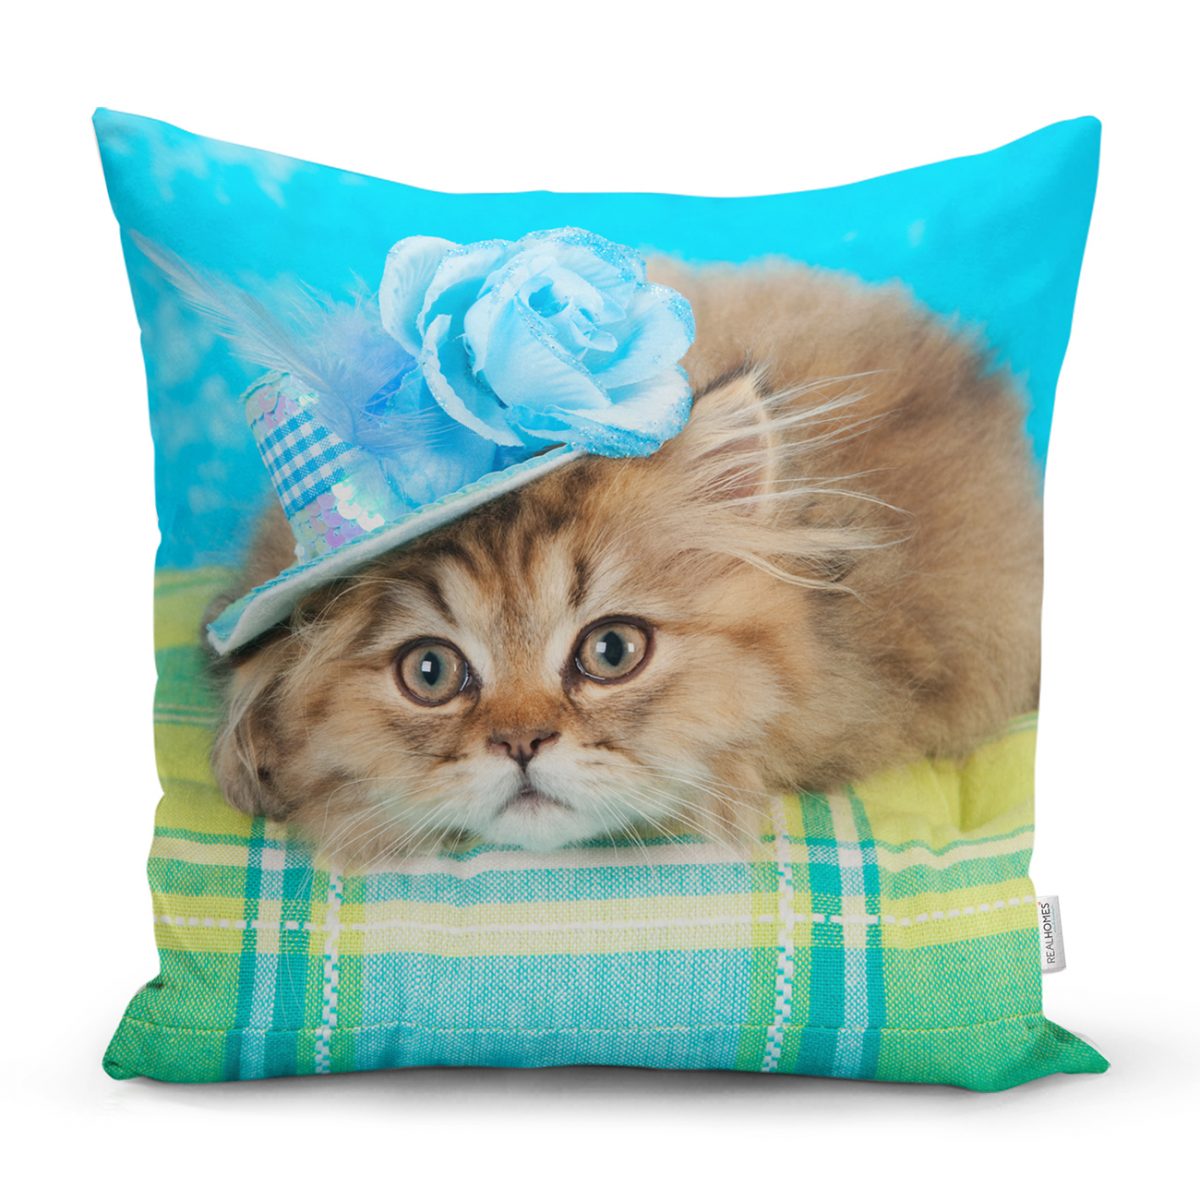 Mavi Şapkalı Kedi Desenli Modern Kırlent Kılıfı Realhomes